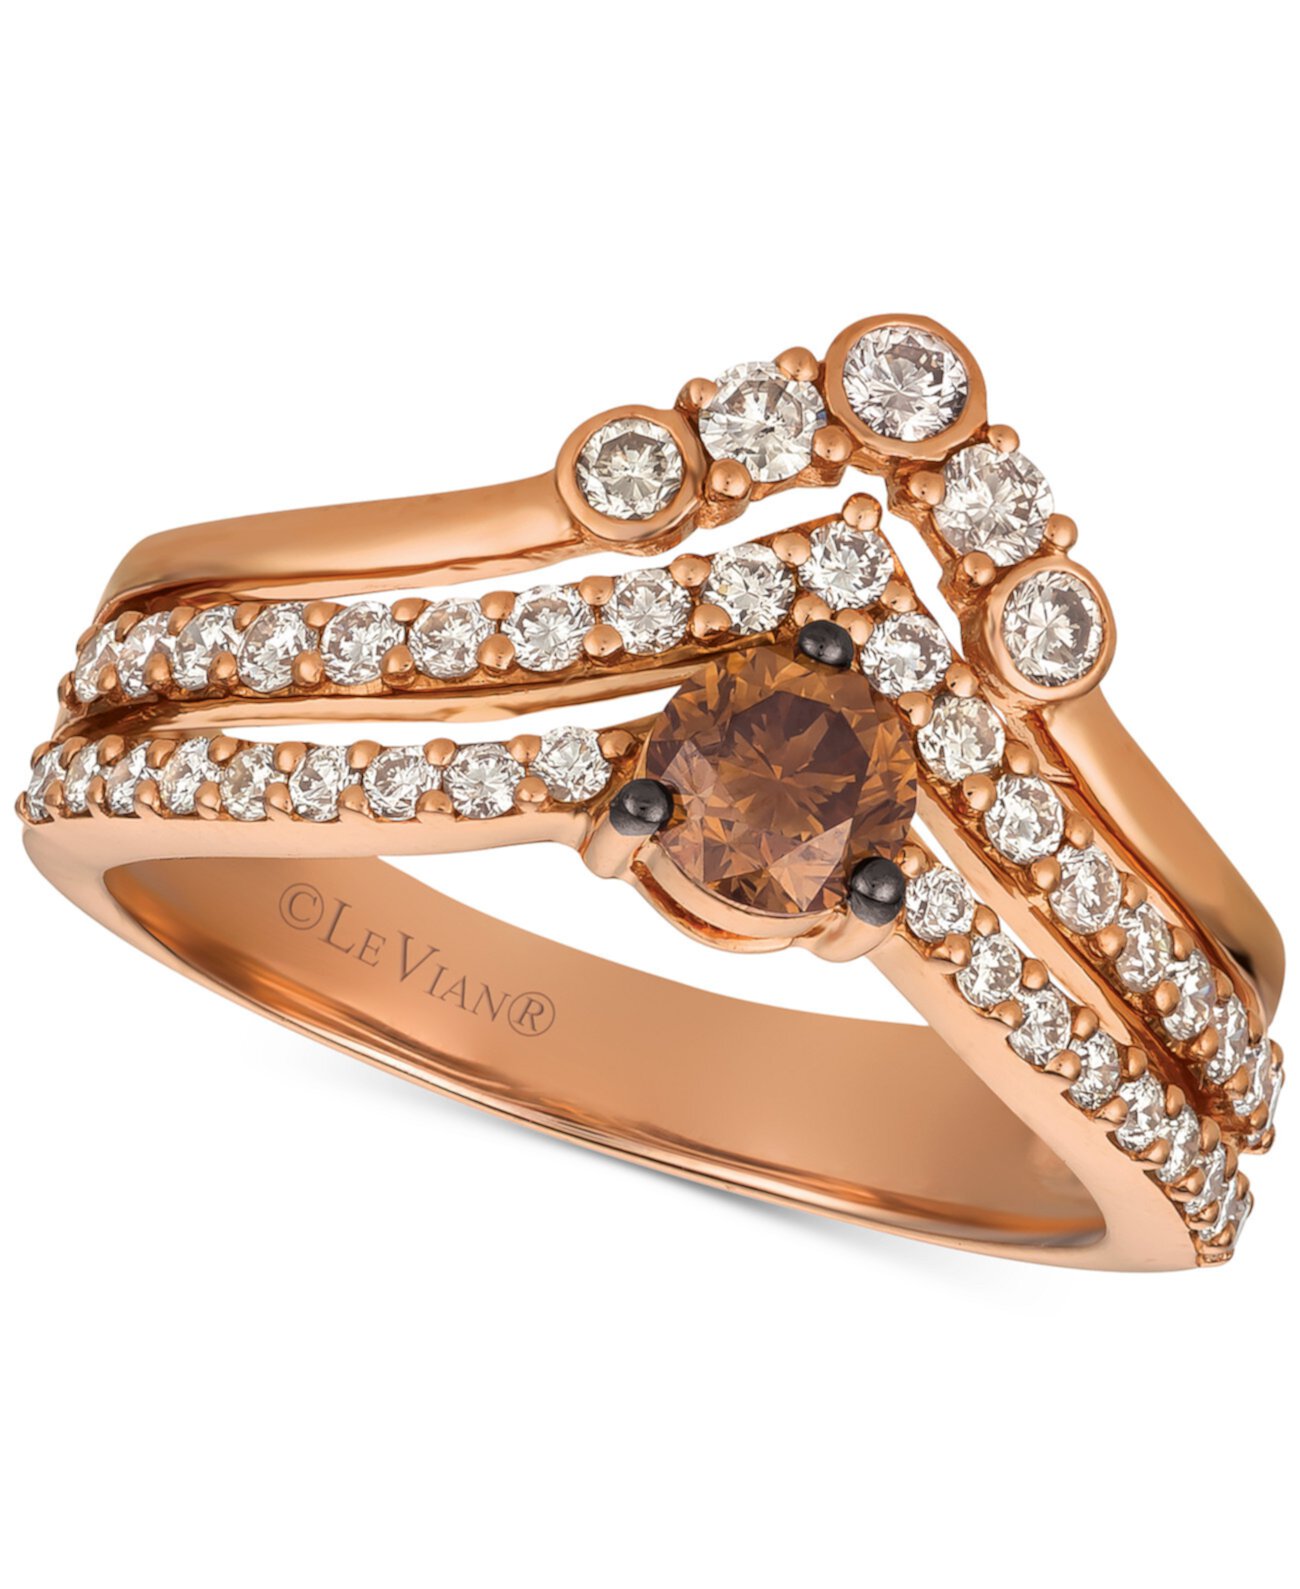 Массивное кольцо Chocolate Diamonds® и Nude Diamonds ™ (1 карат вместе) из розового золота 14 карат Le Vian